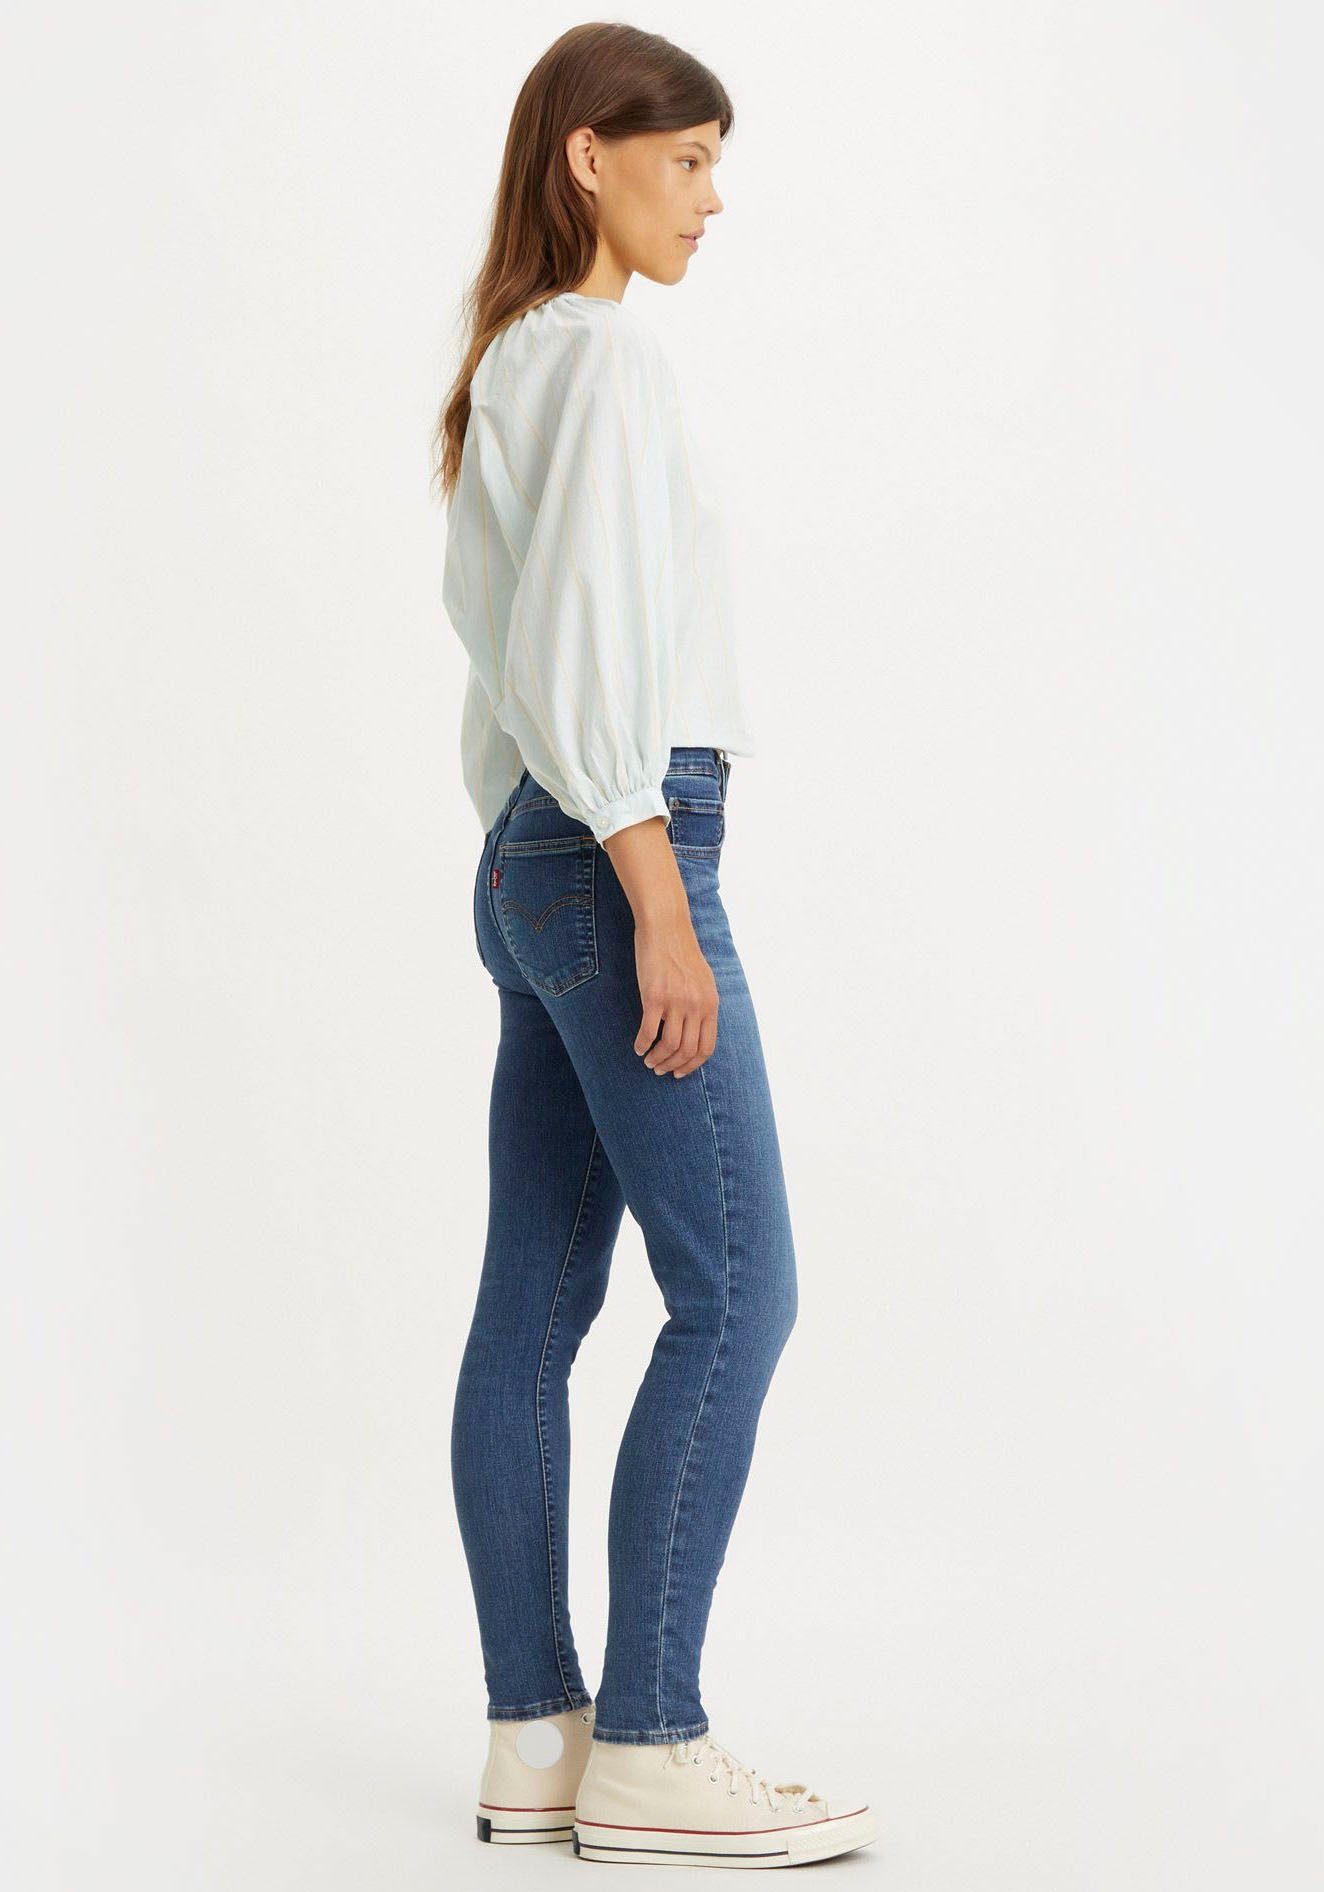 Levi's® in indigo rise High mit Bund 721 skinny blue mid hohem worn Skinny-fit-Jeans